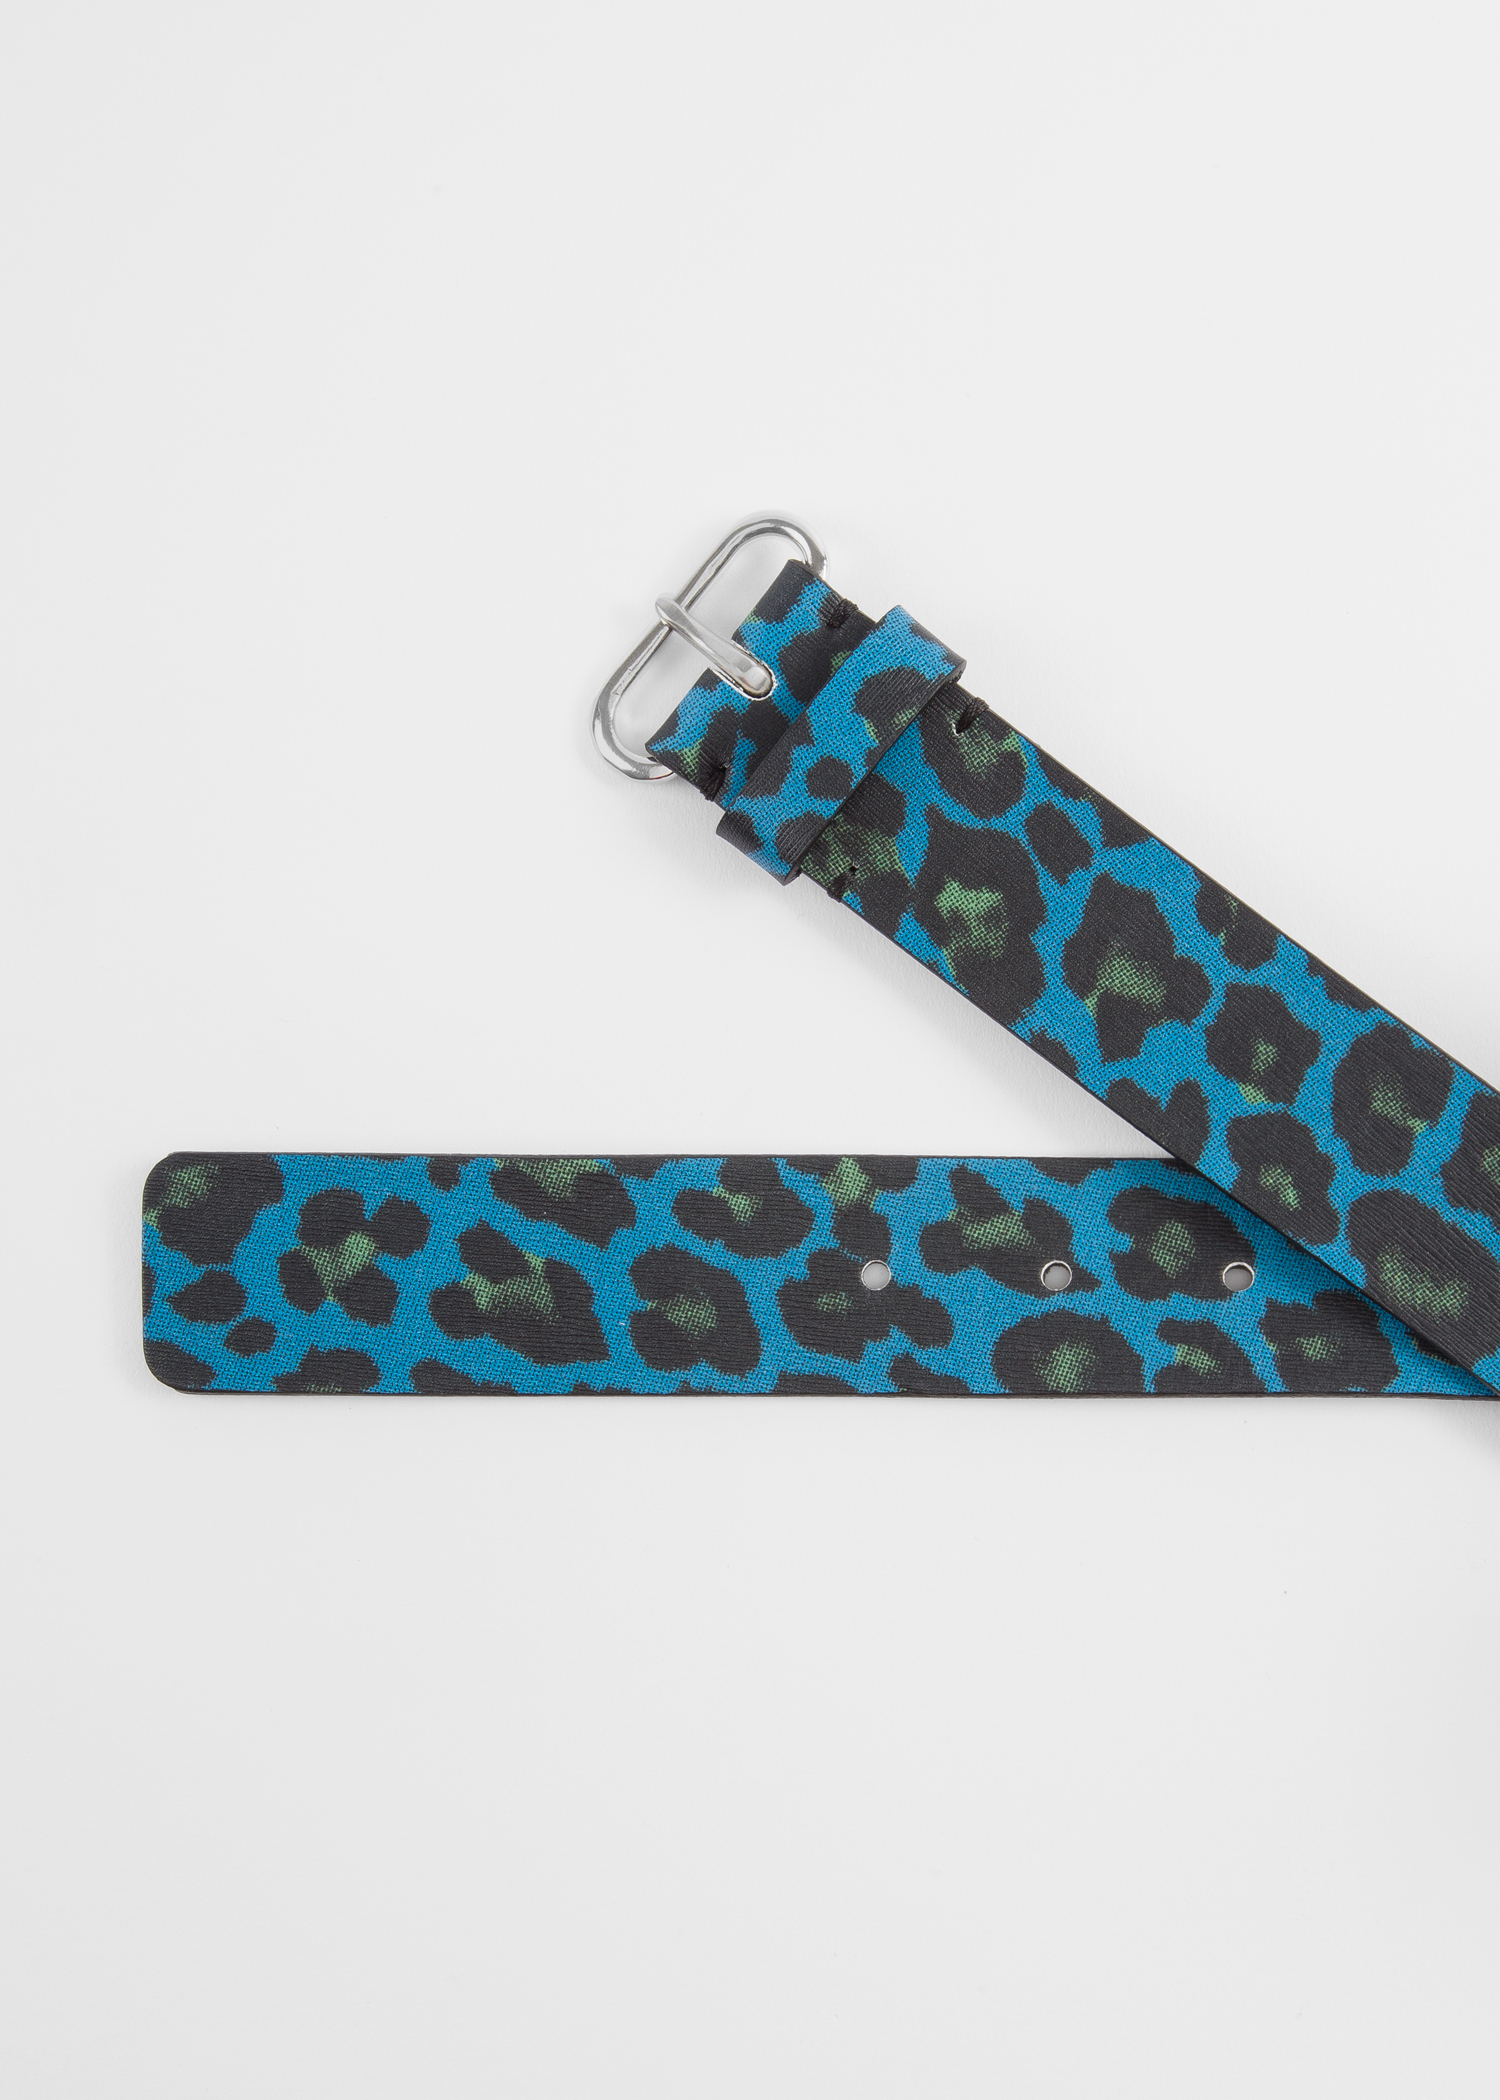 Buckle View - Women's Blue 'Leopard' Print Leather Belt Paul Smith